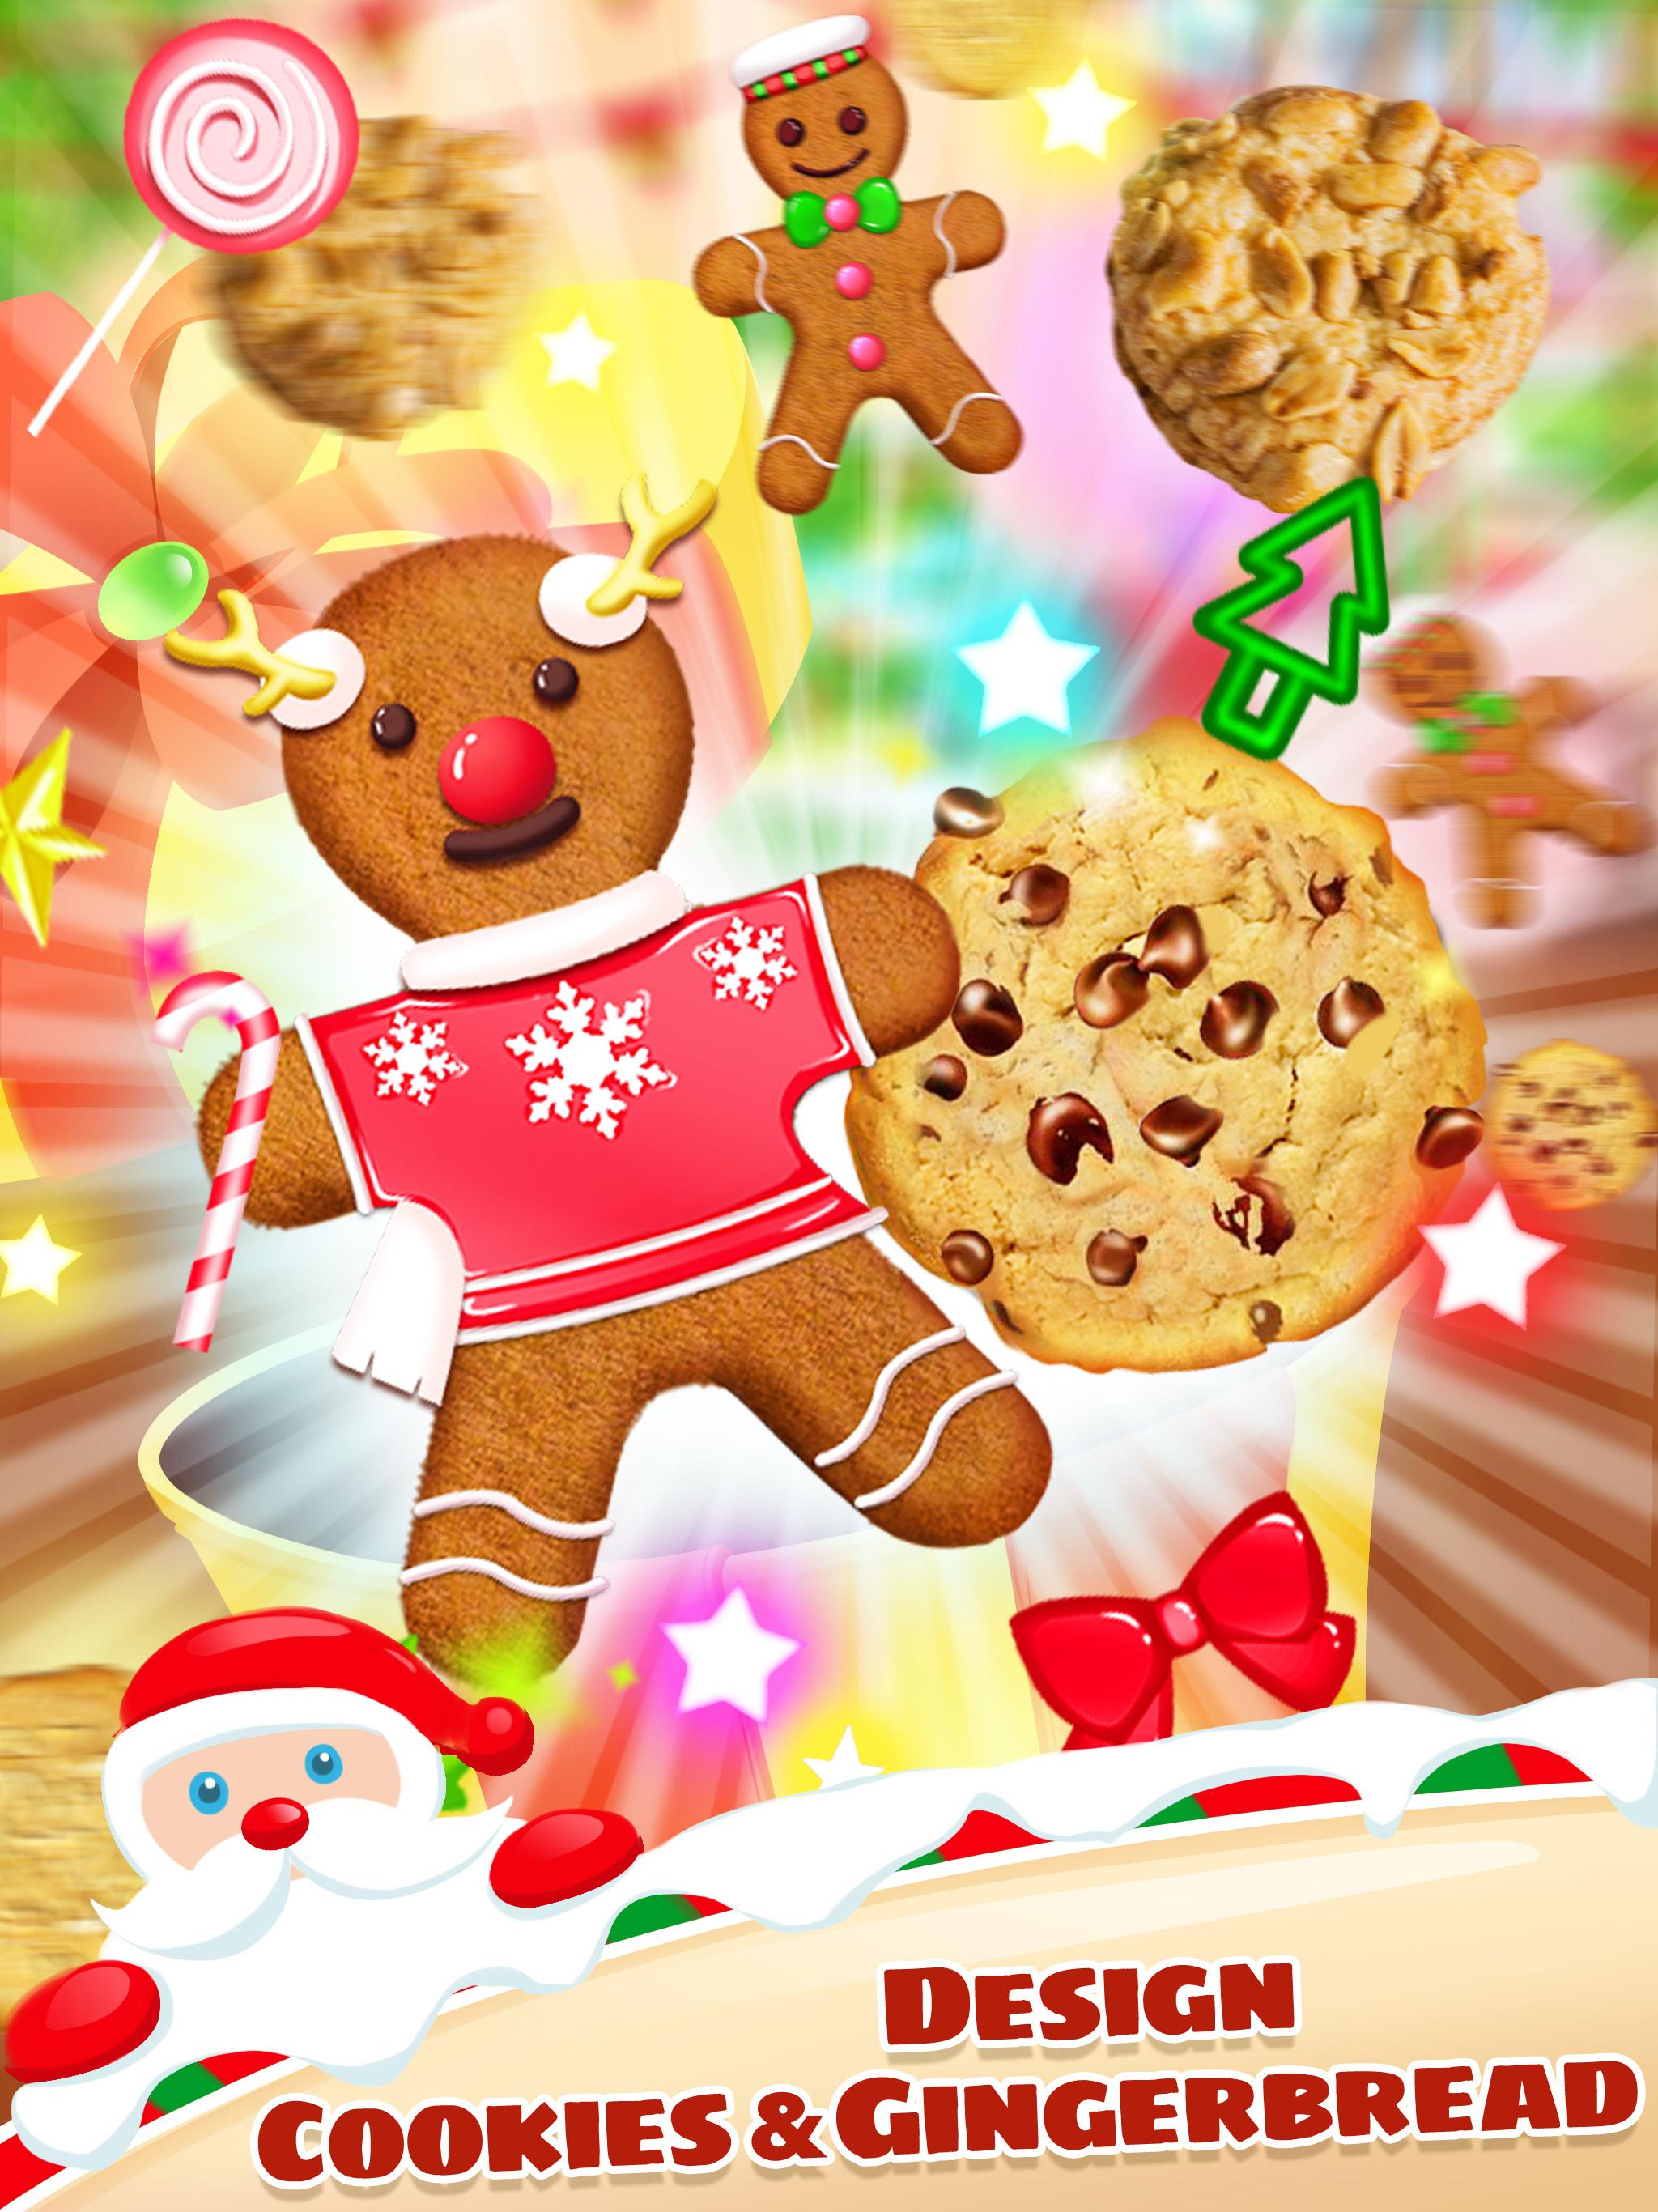 Christmas Cookies Party - Sweet Desserts 1.0 Screenshot 8